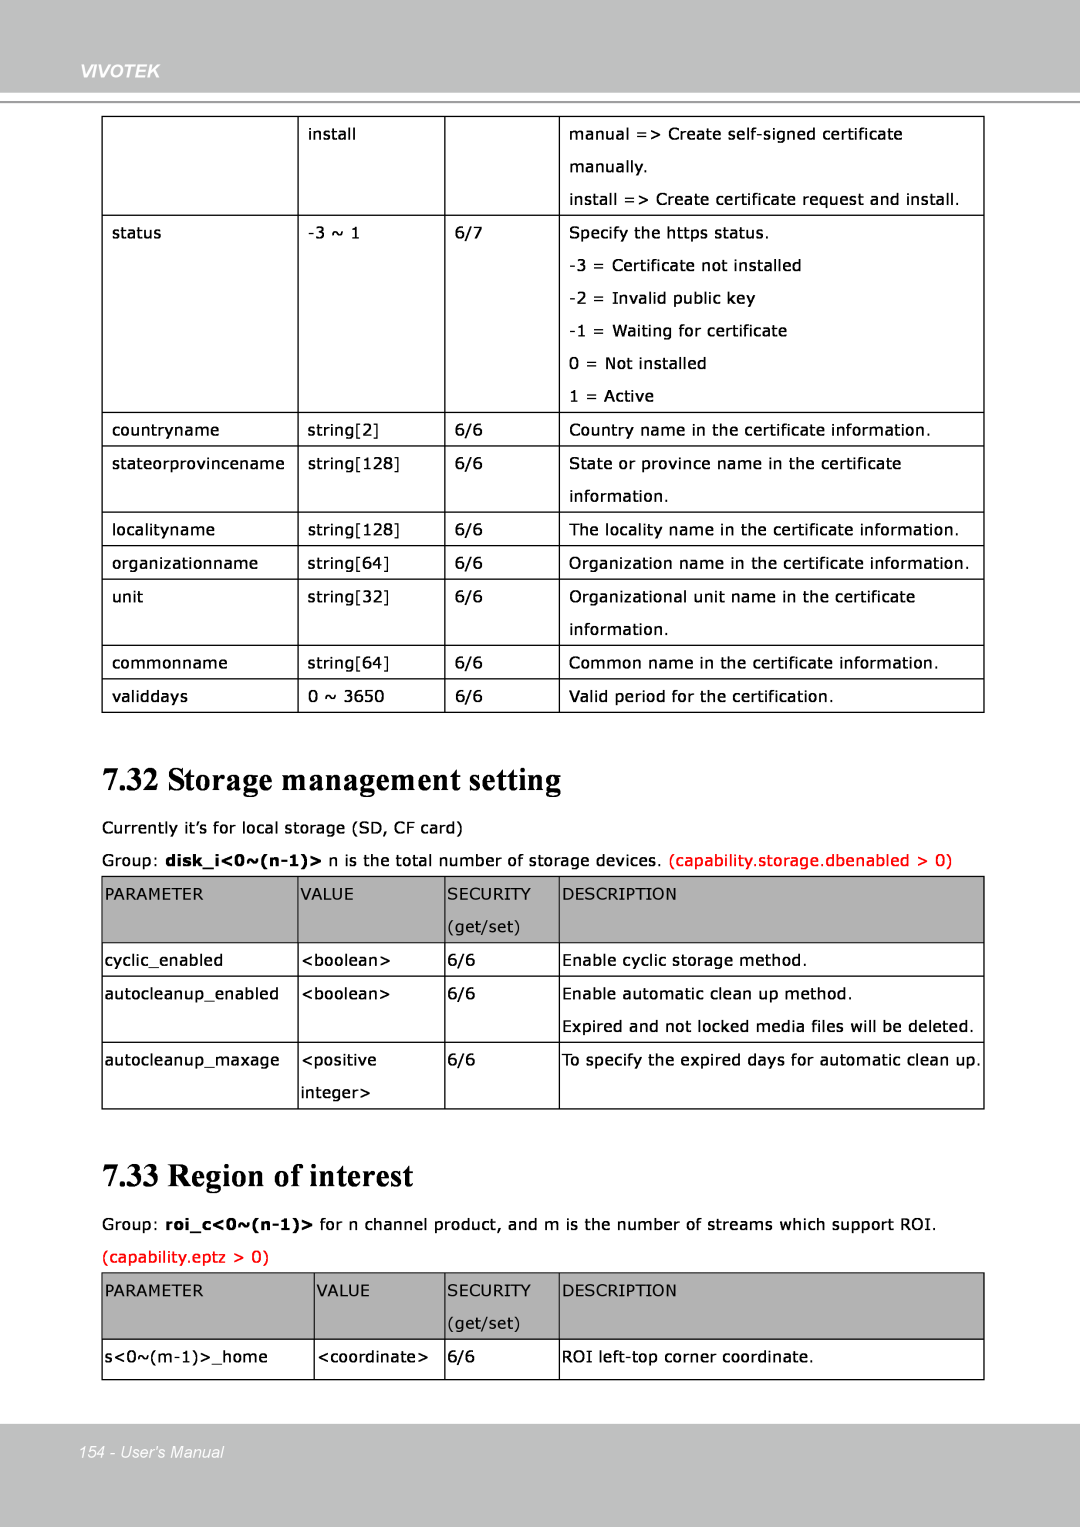 Vivotek IP8151 manual Storage management setting, Region of interest, Vivotek, Users Manual 